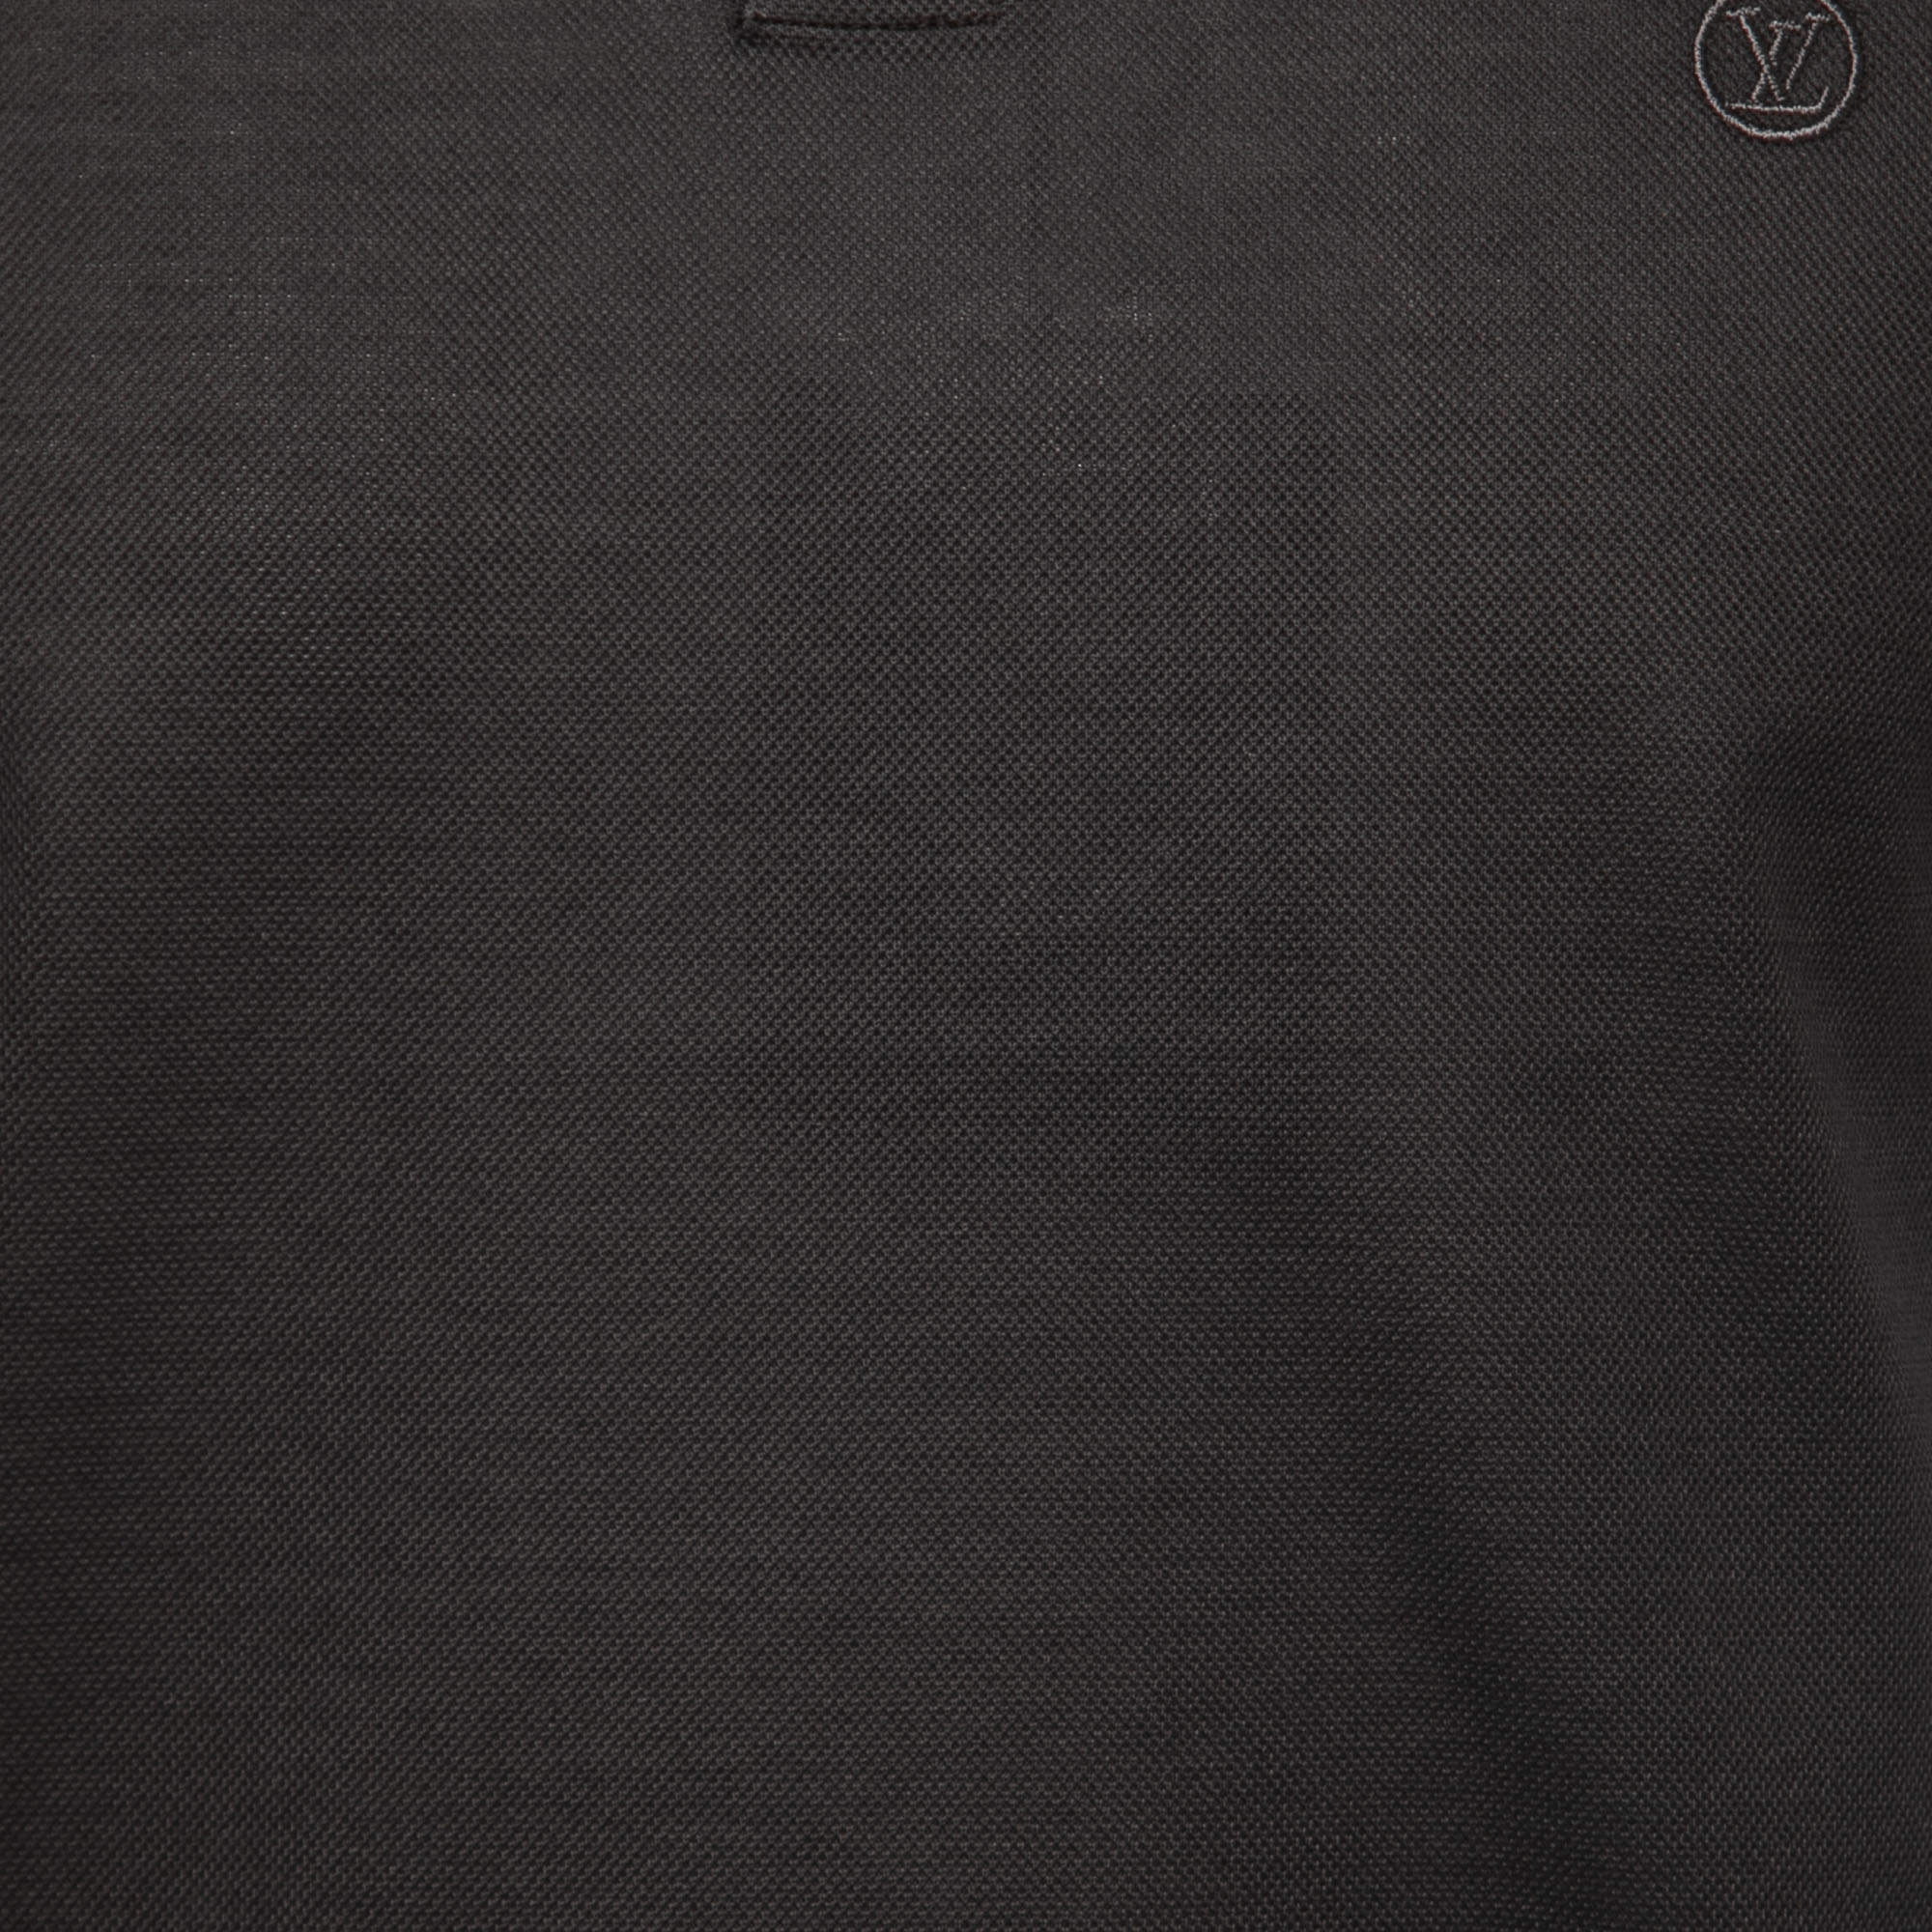 Polo shirt Louis Vuitton Black size S International in Cotton - 32459402